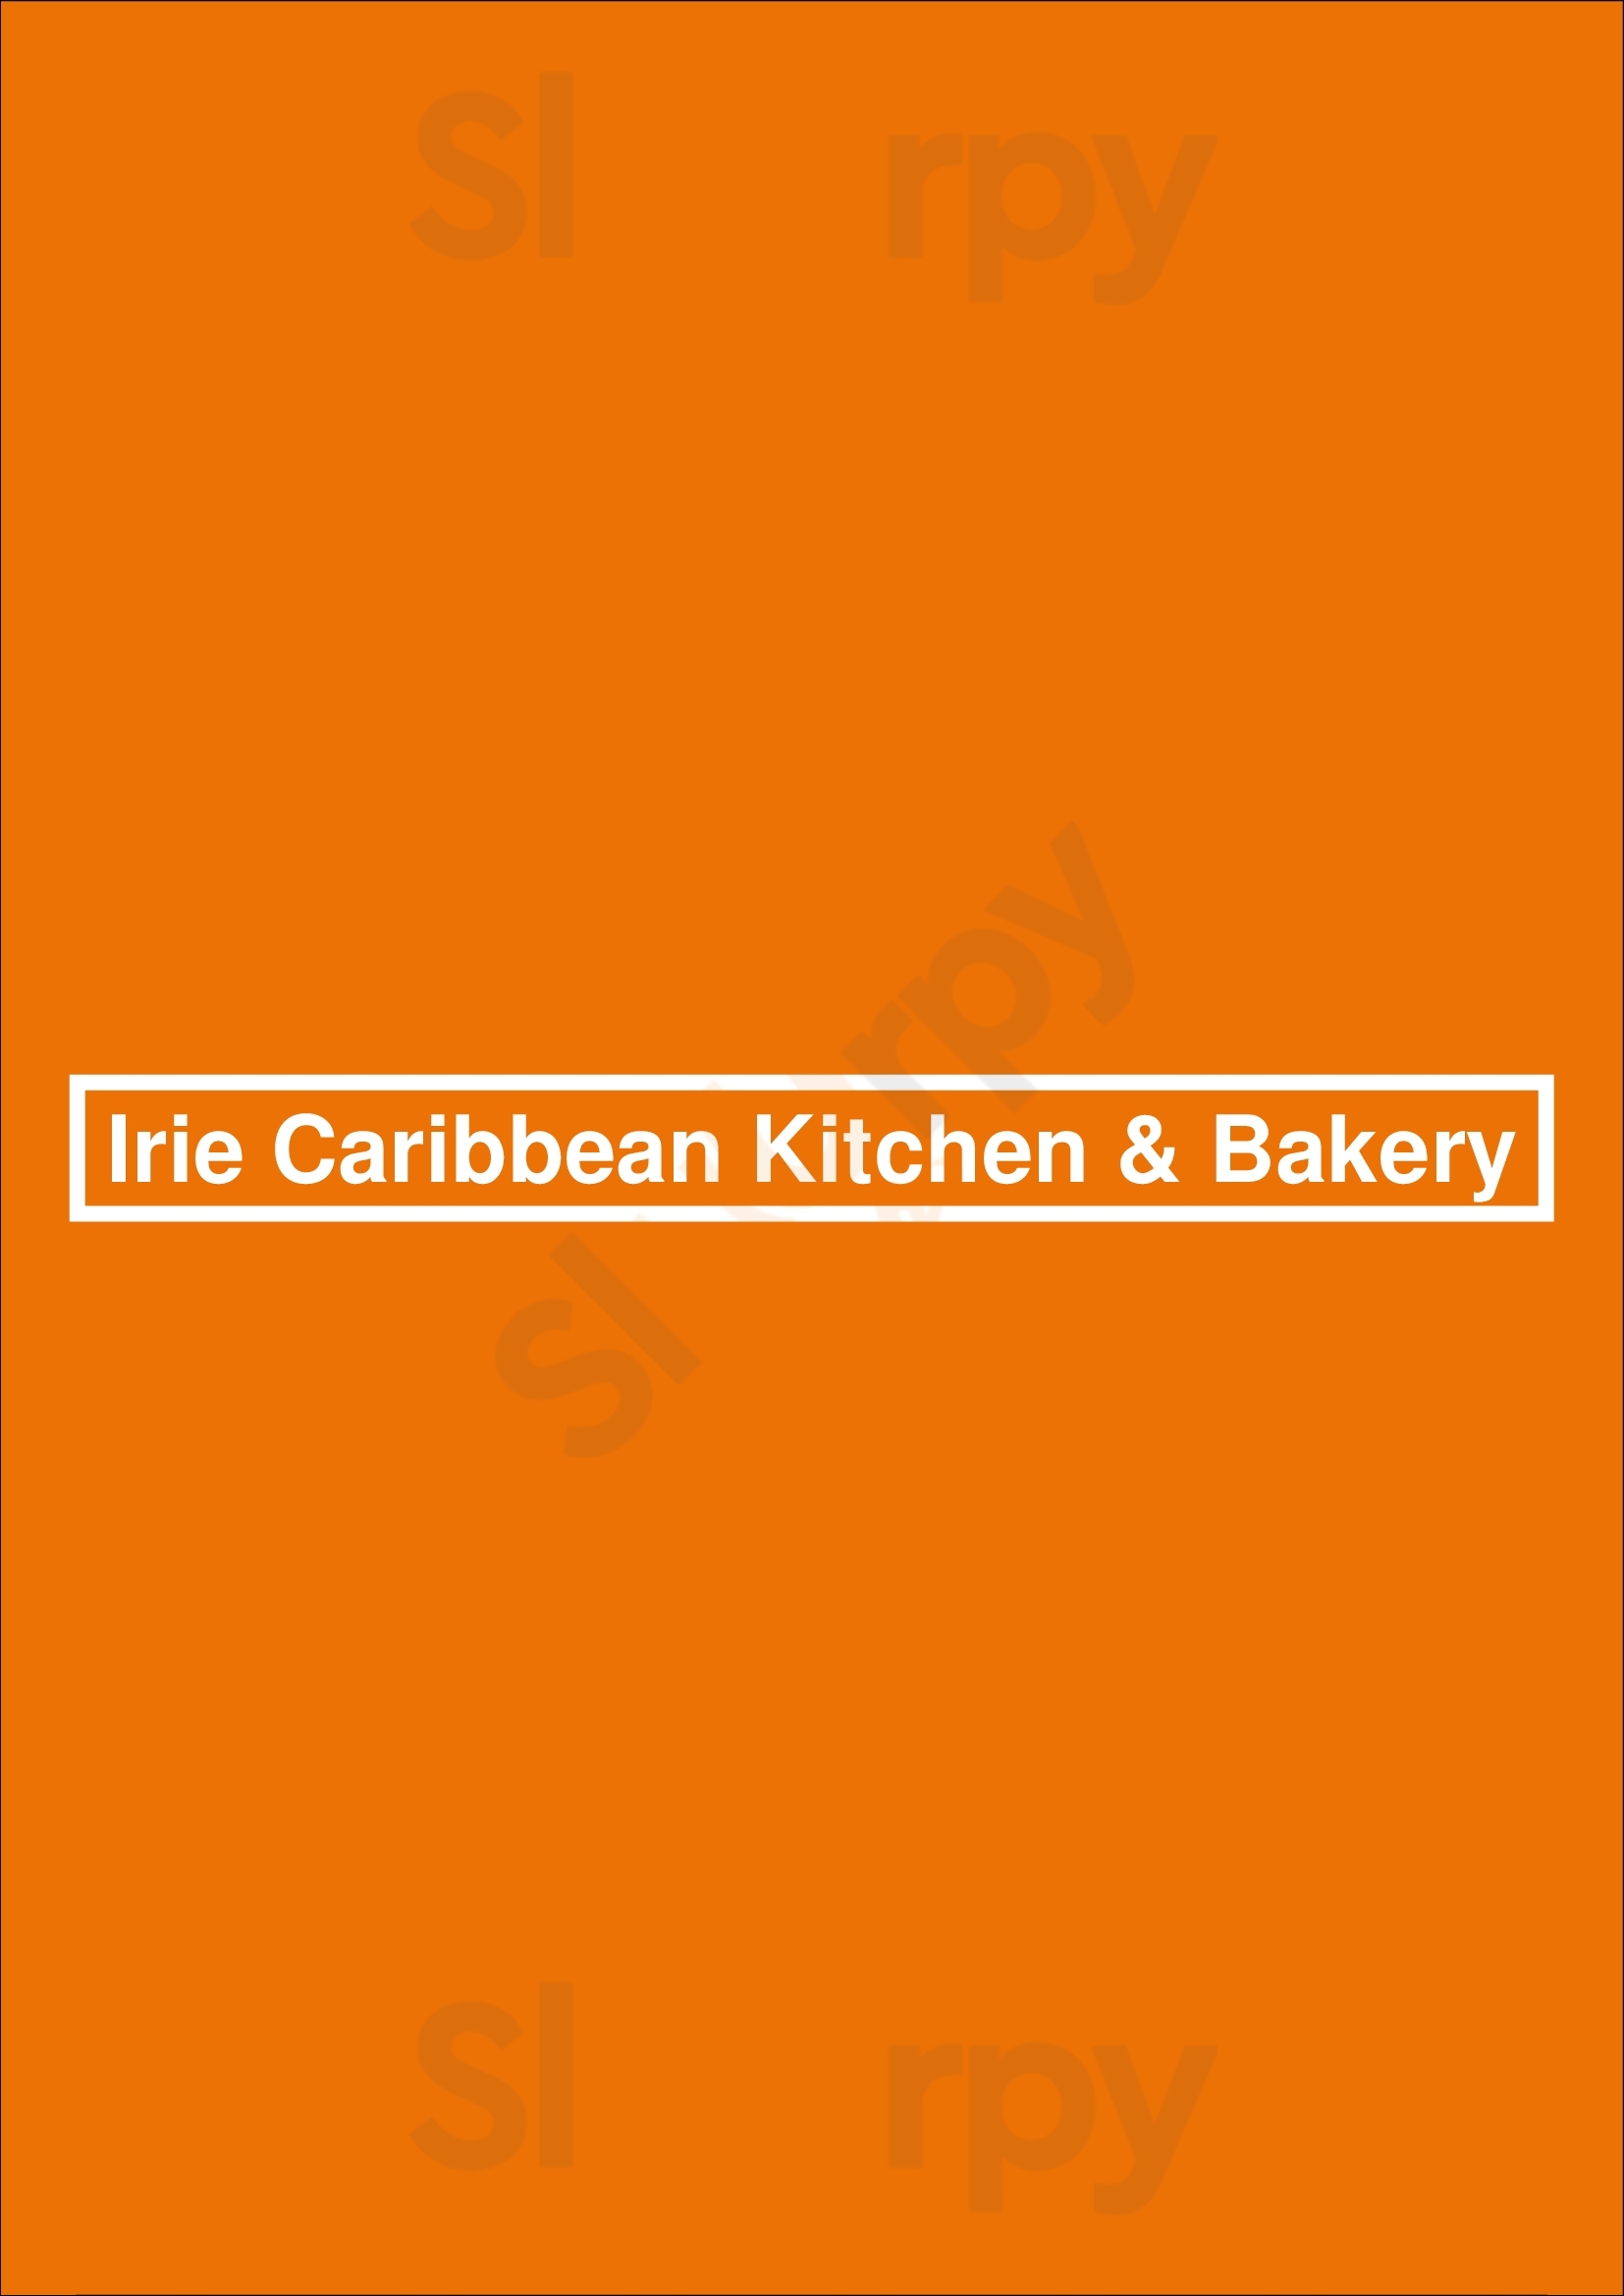 Irie Caribbean Kitchen & Bakery Brooklyn Menu - 1